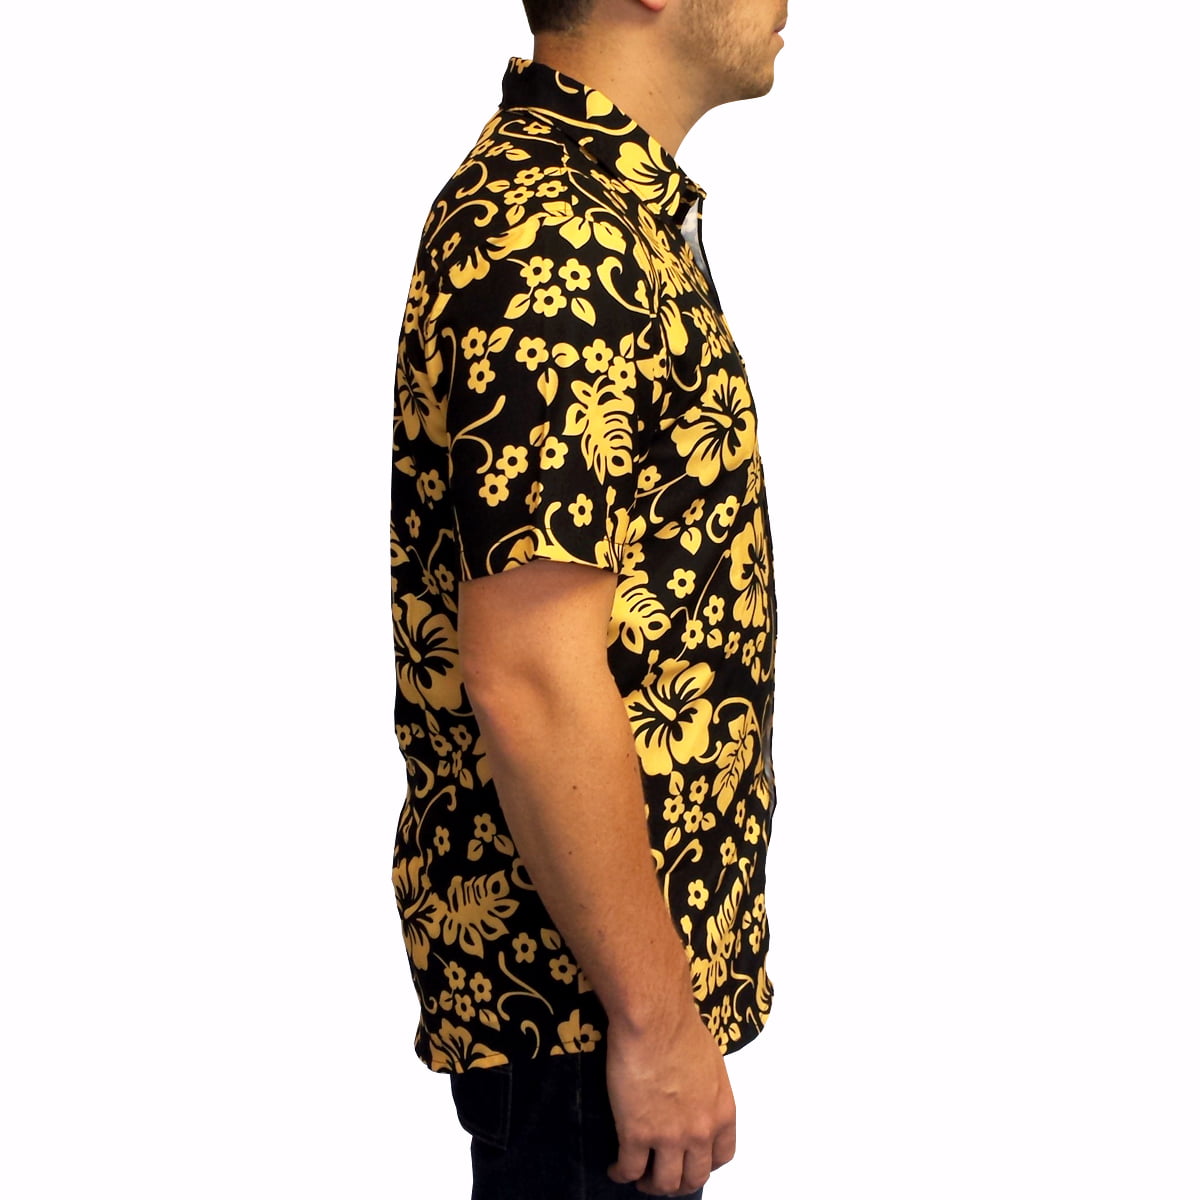 Fear and Loathing in Las Vegas Raoul Duke Flower T-Shirt Cosplay Costume Men Top